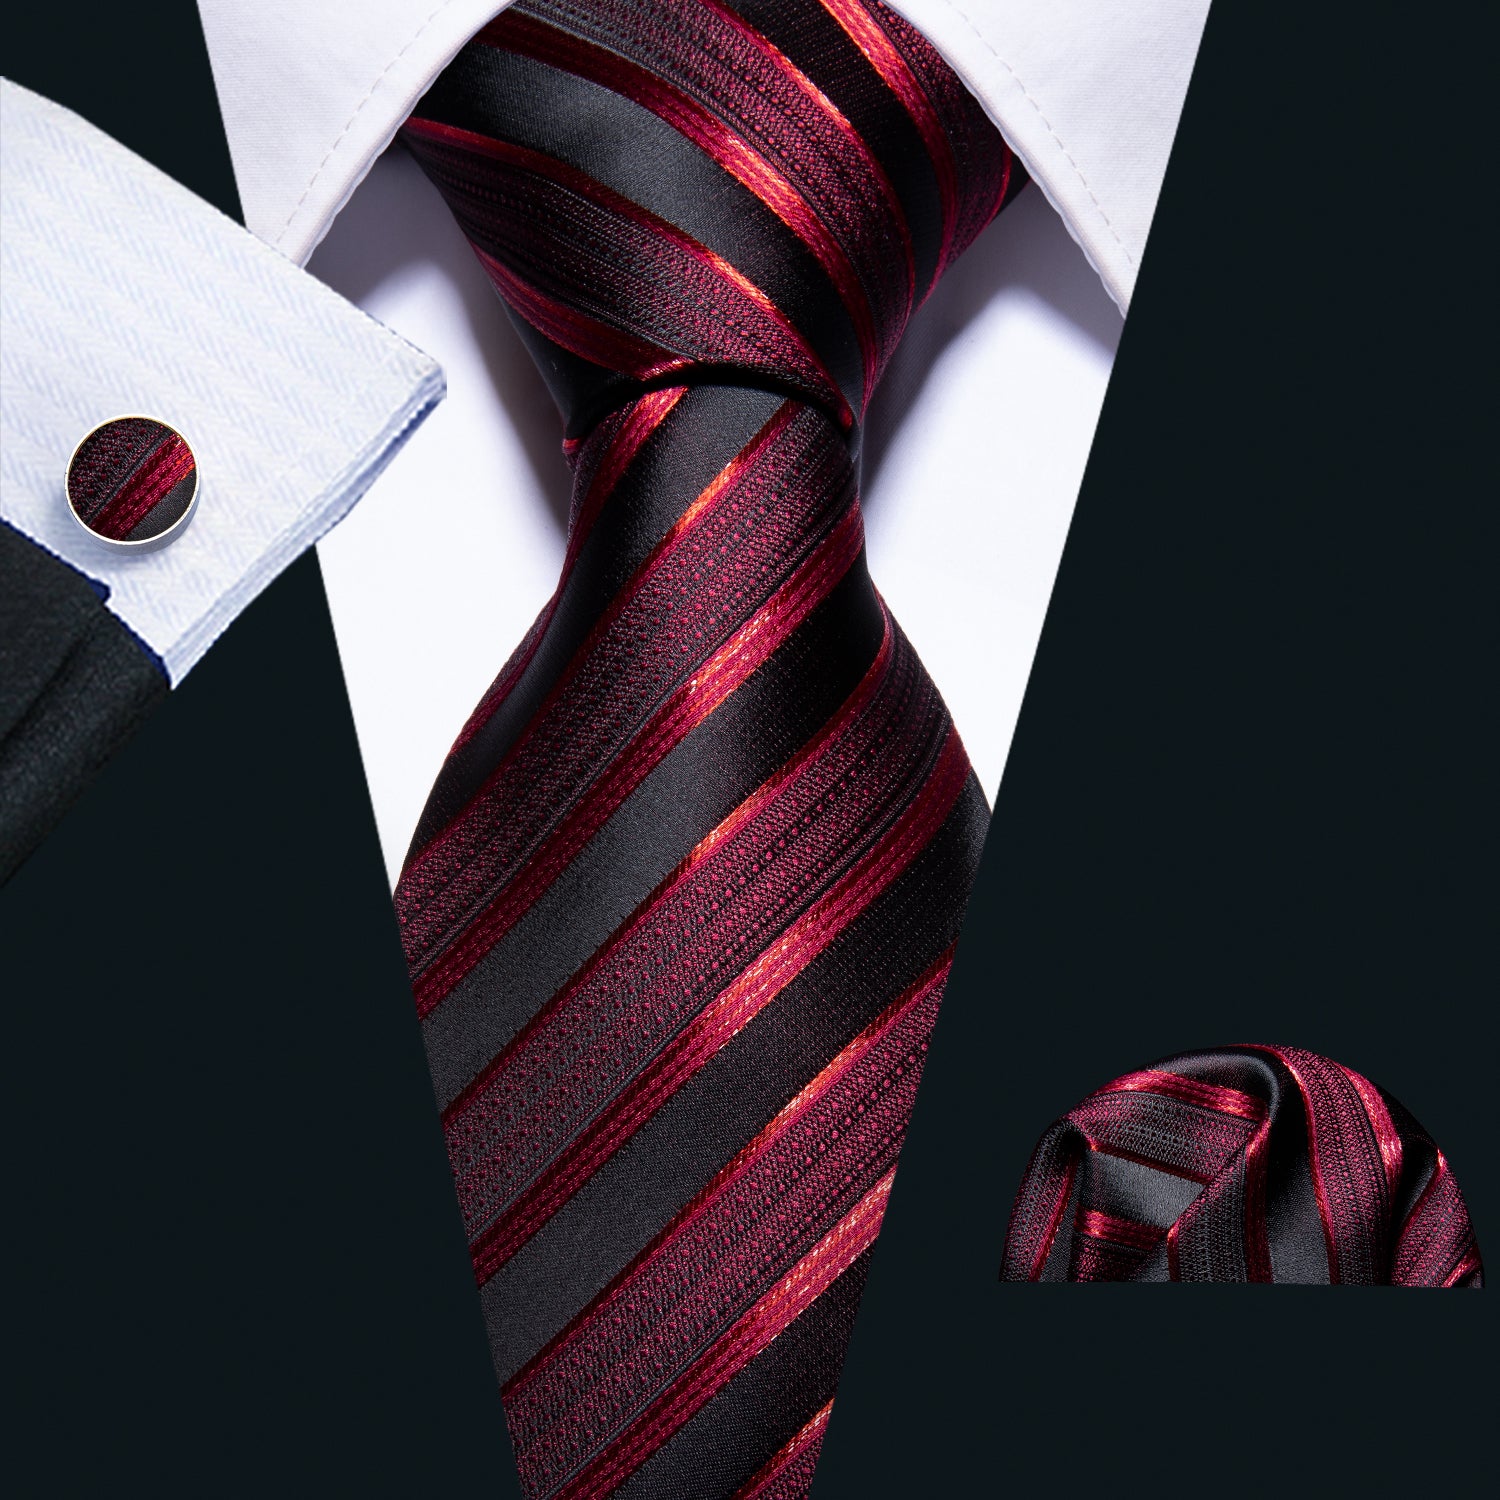 Barry.wang Red Tie Classic Stripe Silk Tie Pocket Square Cufflinks Set